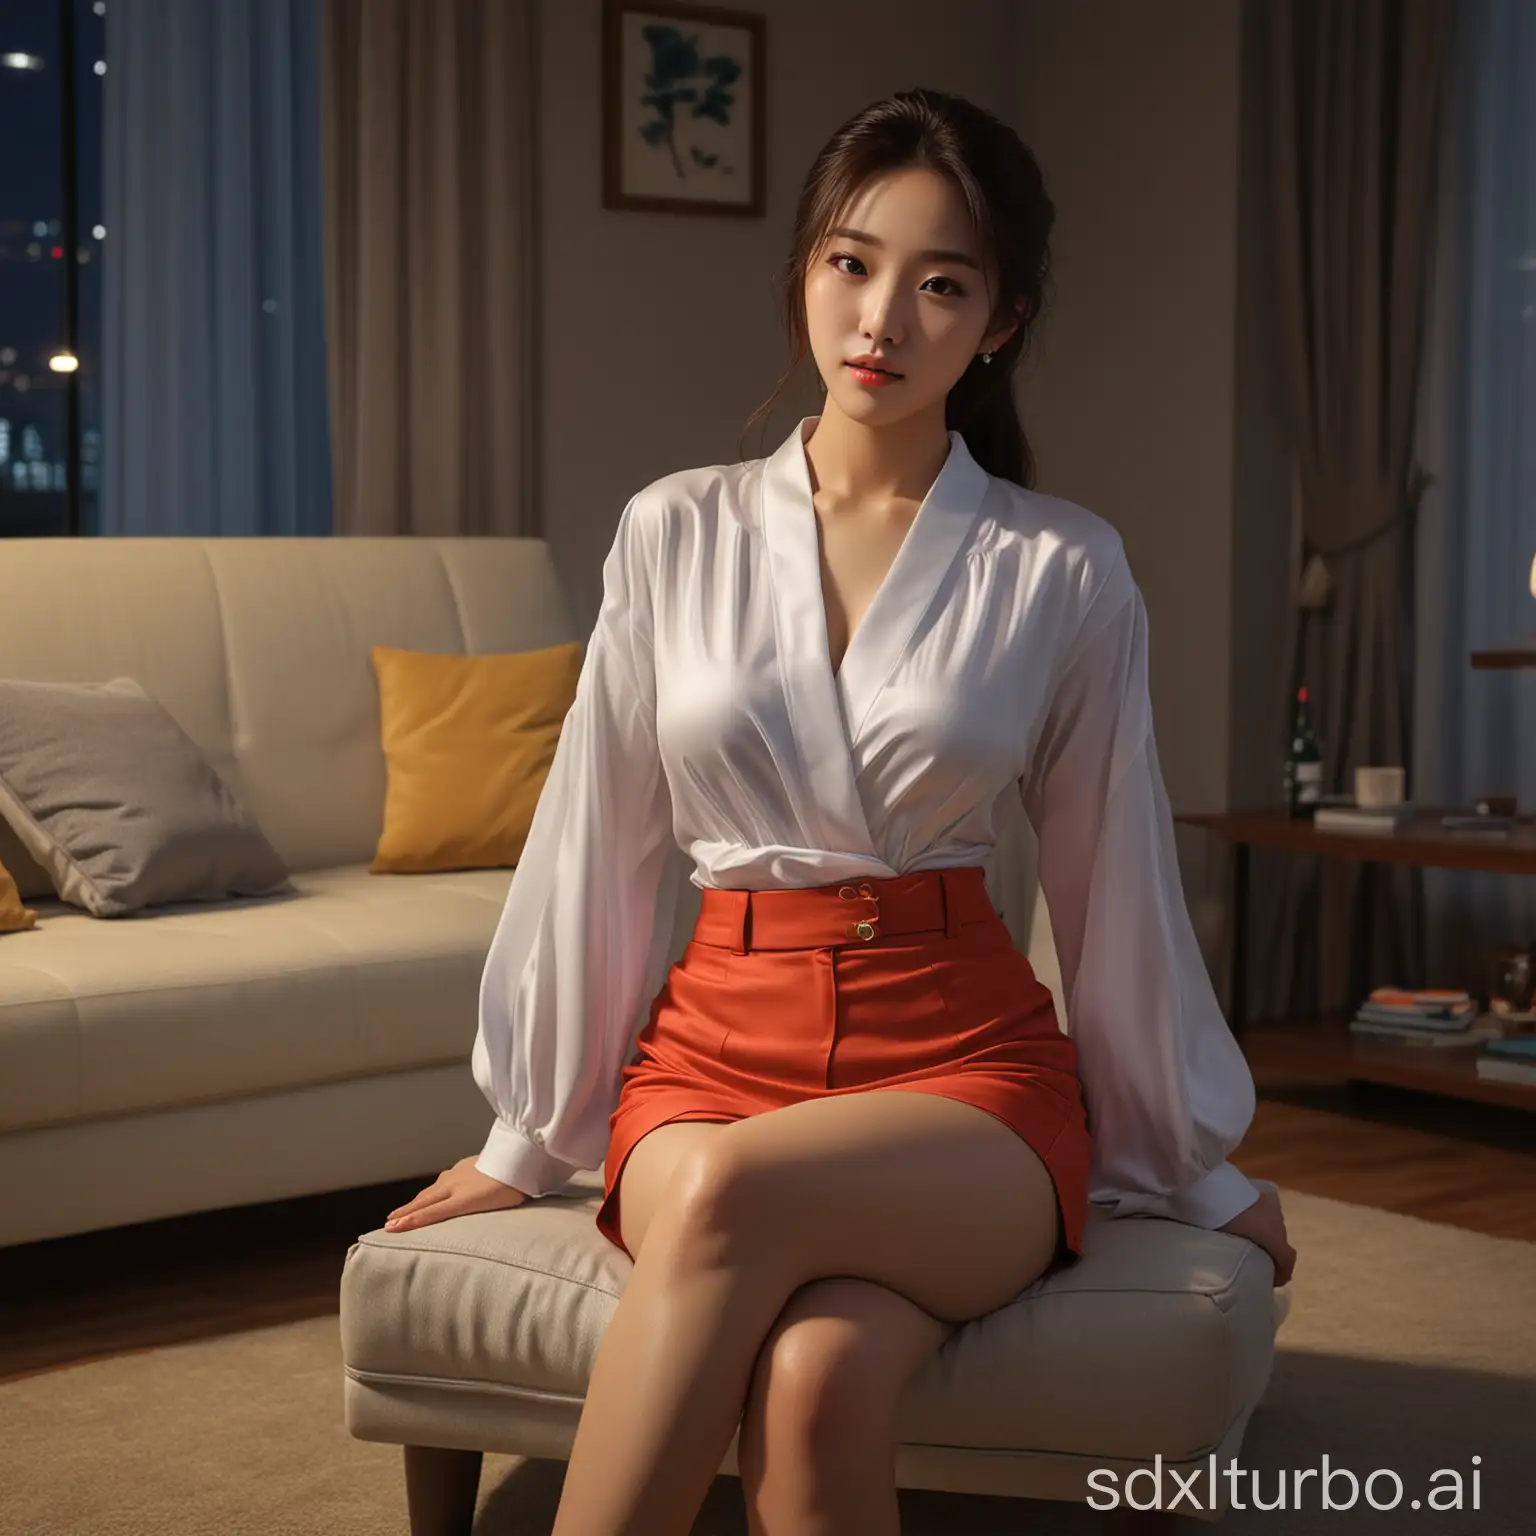 Sensual-Korean-Woman-in-Elegant-Attire-Relaxing-in-Nighttime-Living-Room-Scene